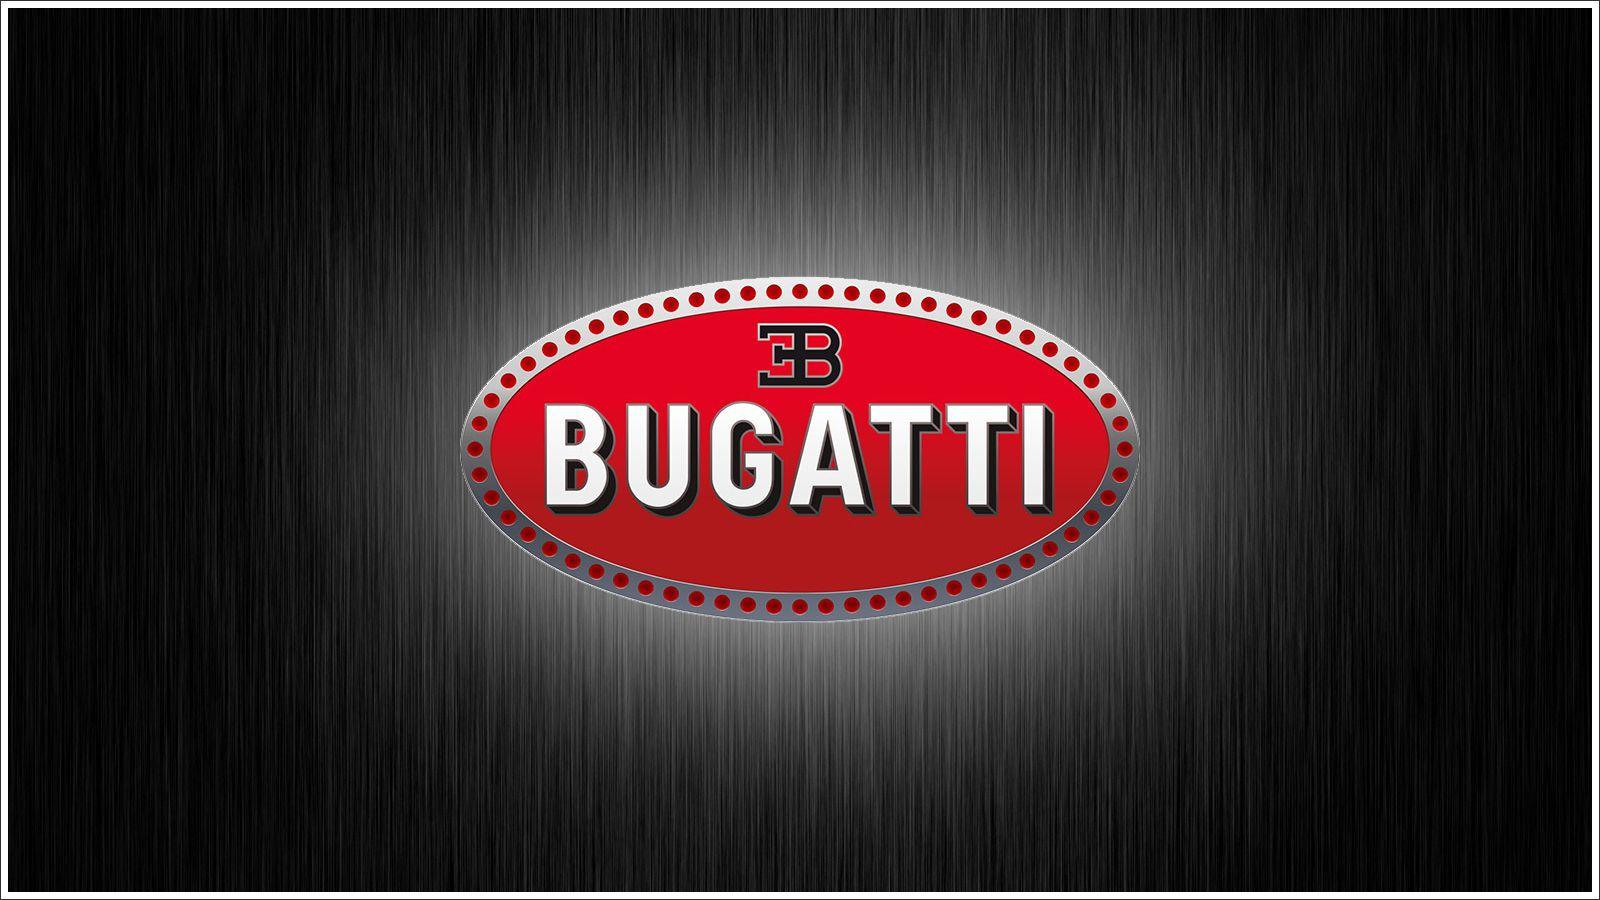 Buggati Logo - Bugatti Logo Meaning and History. Symbol Bugatti. World Cars Brands